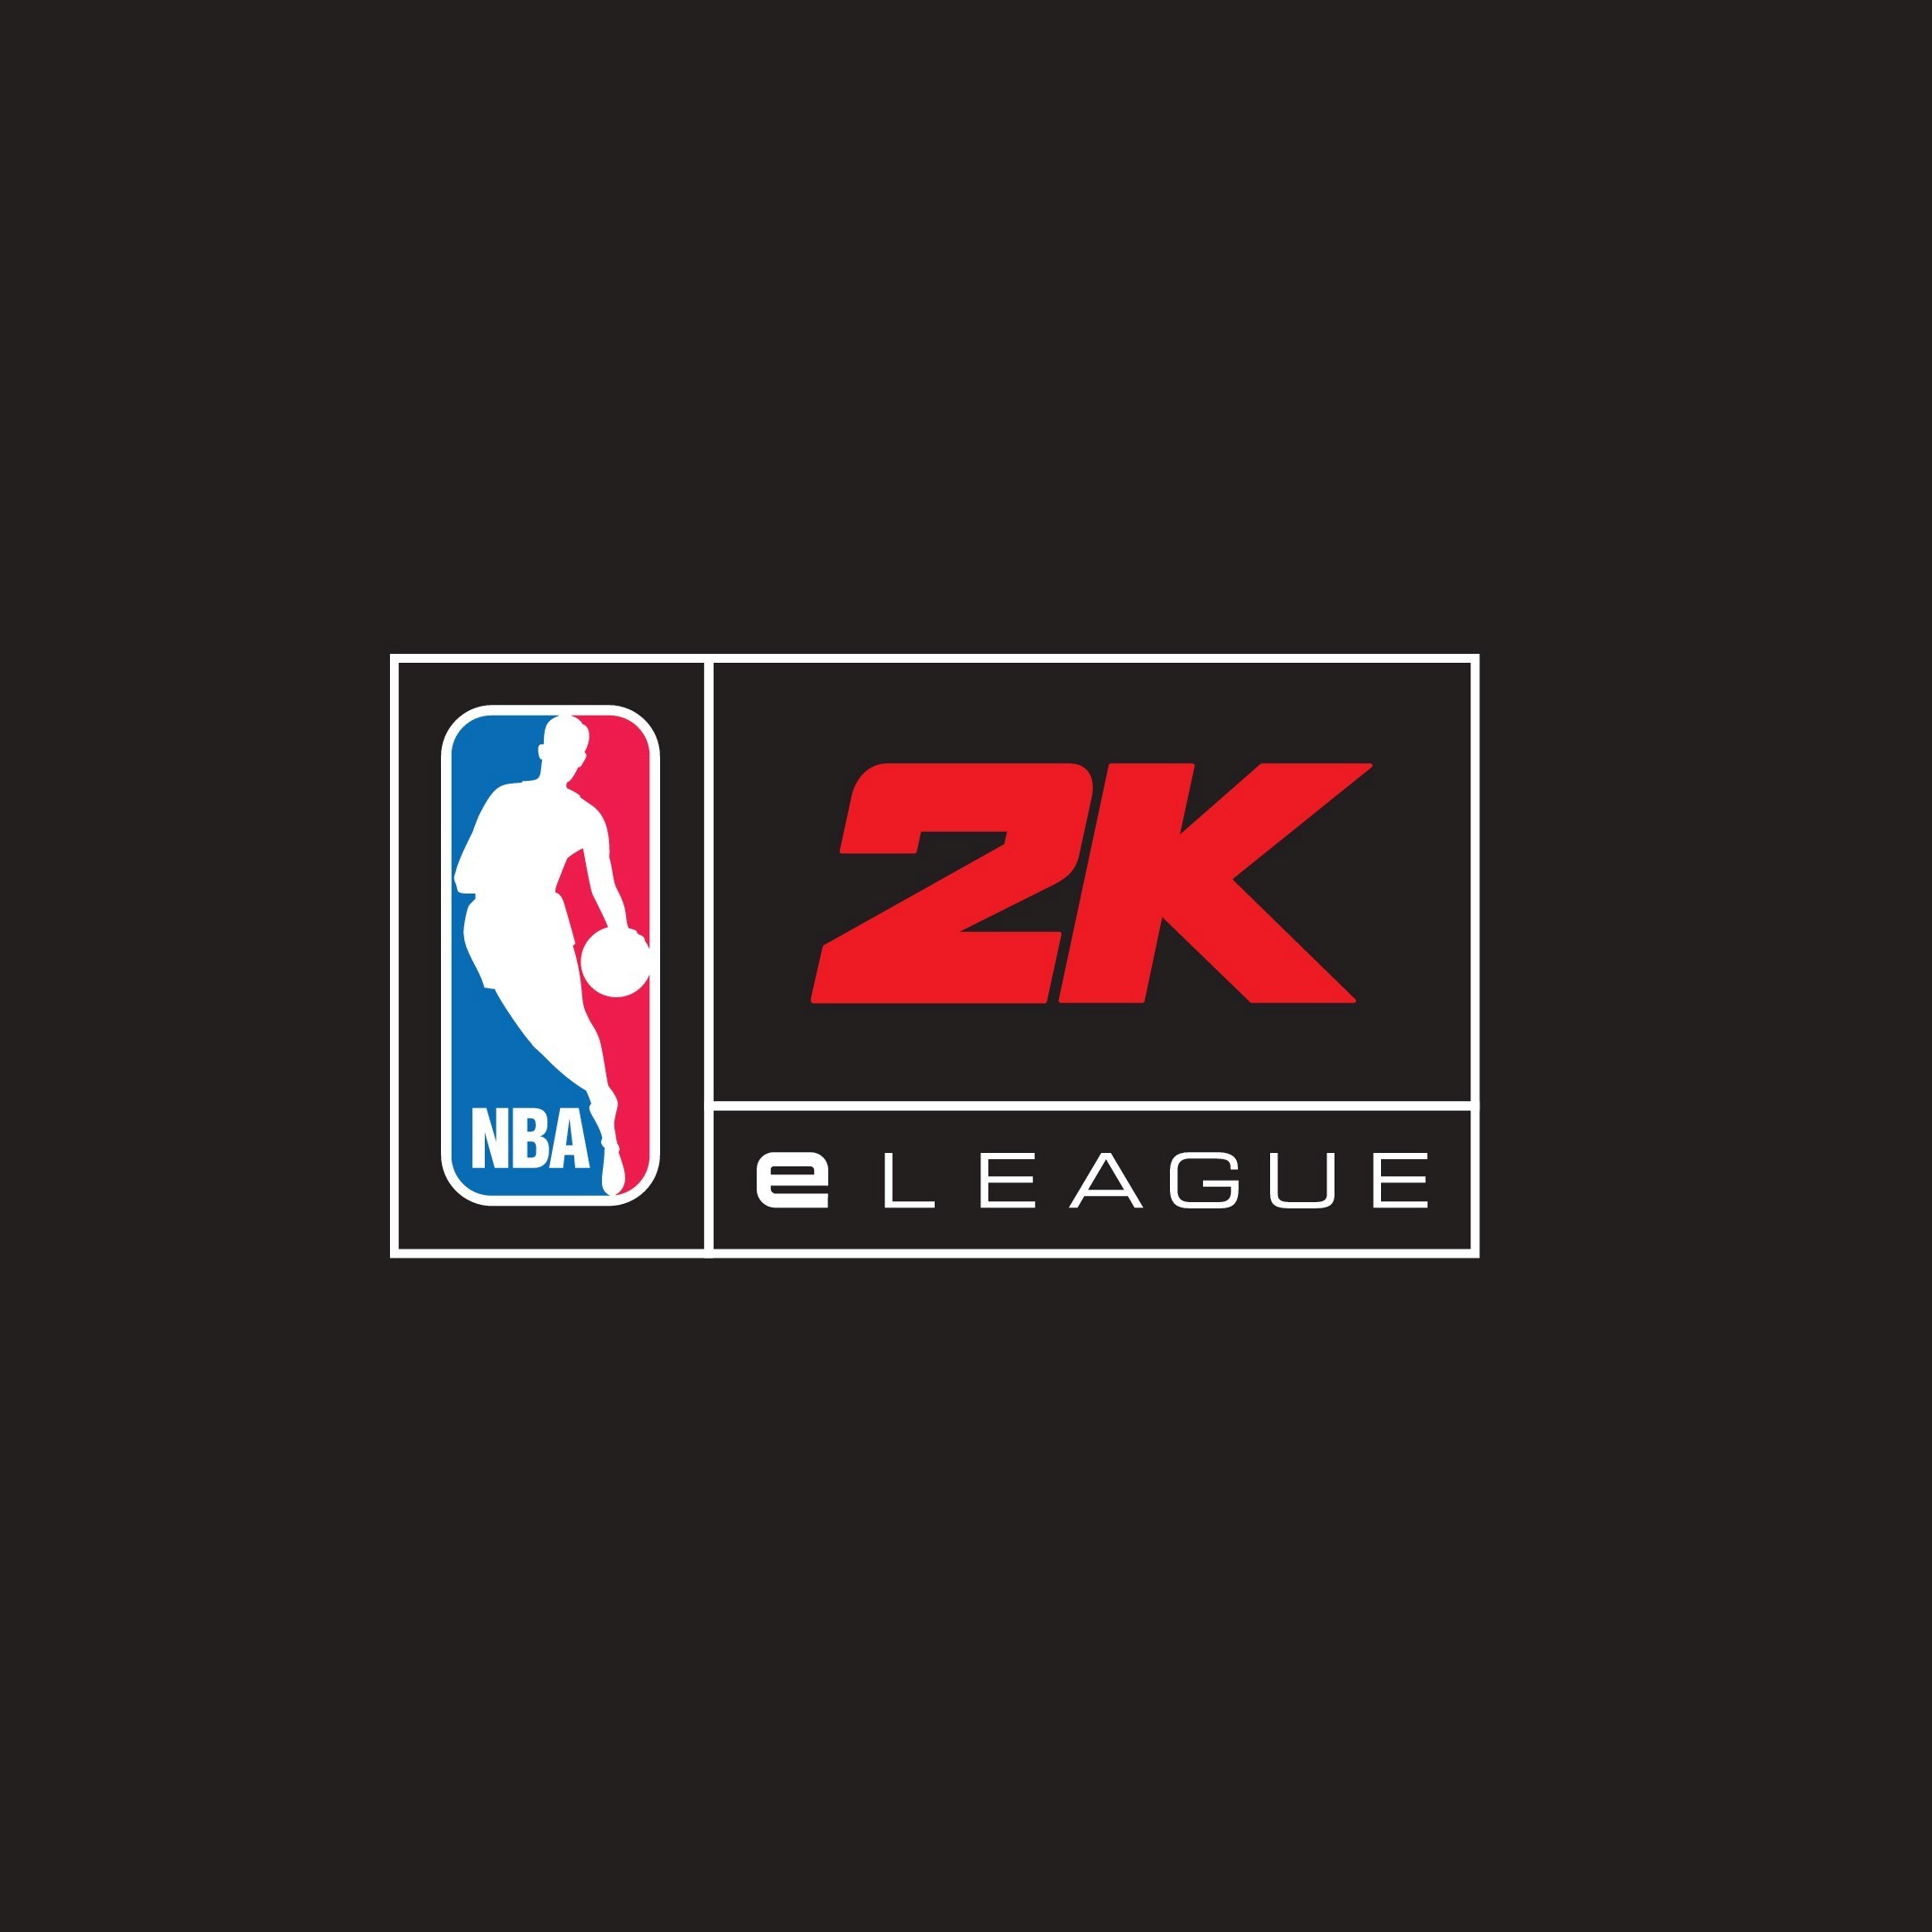 2160x2160 NBA 2K eLeague logo